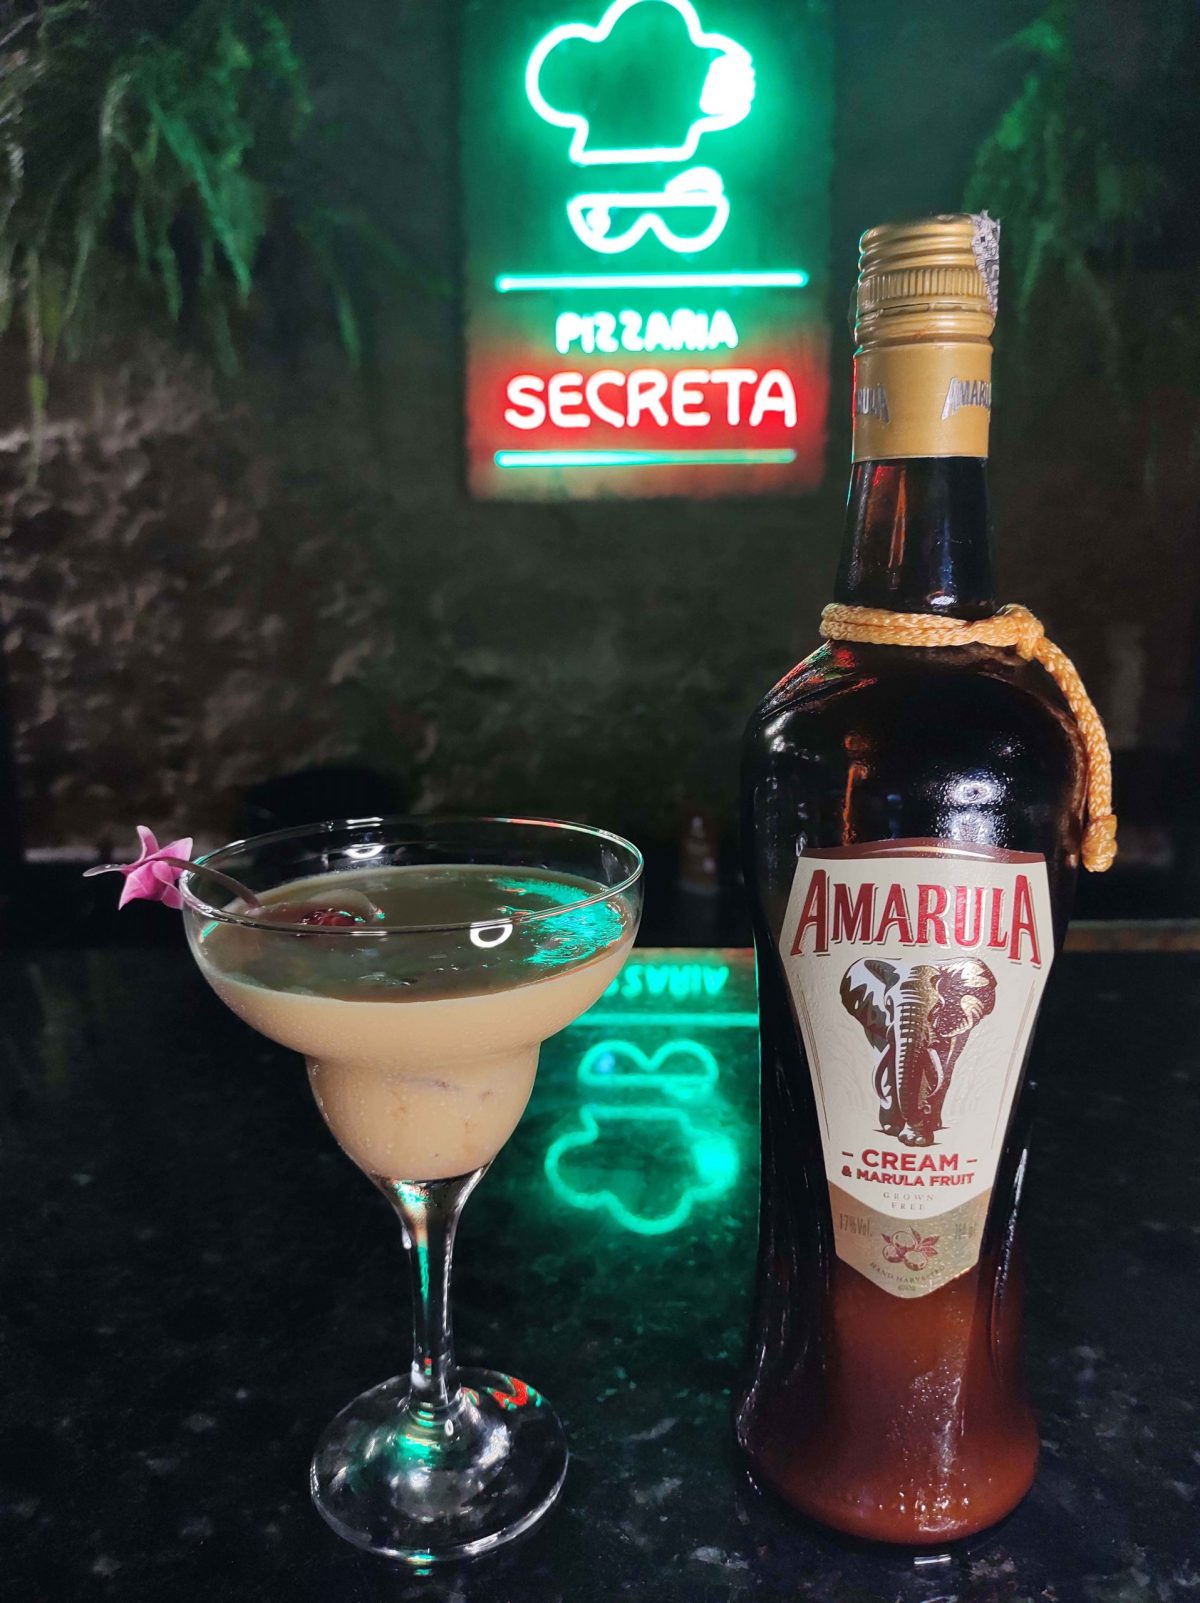 Secreta Pizza Bar - Amarula Passion